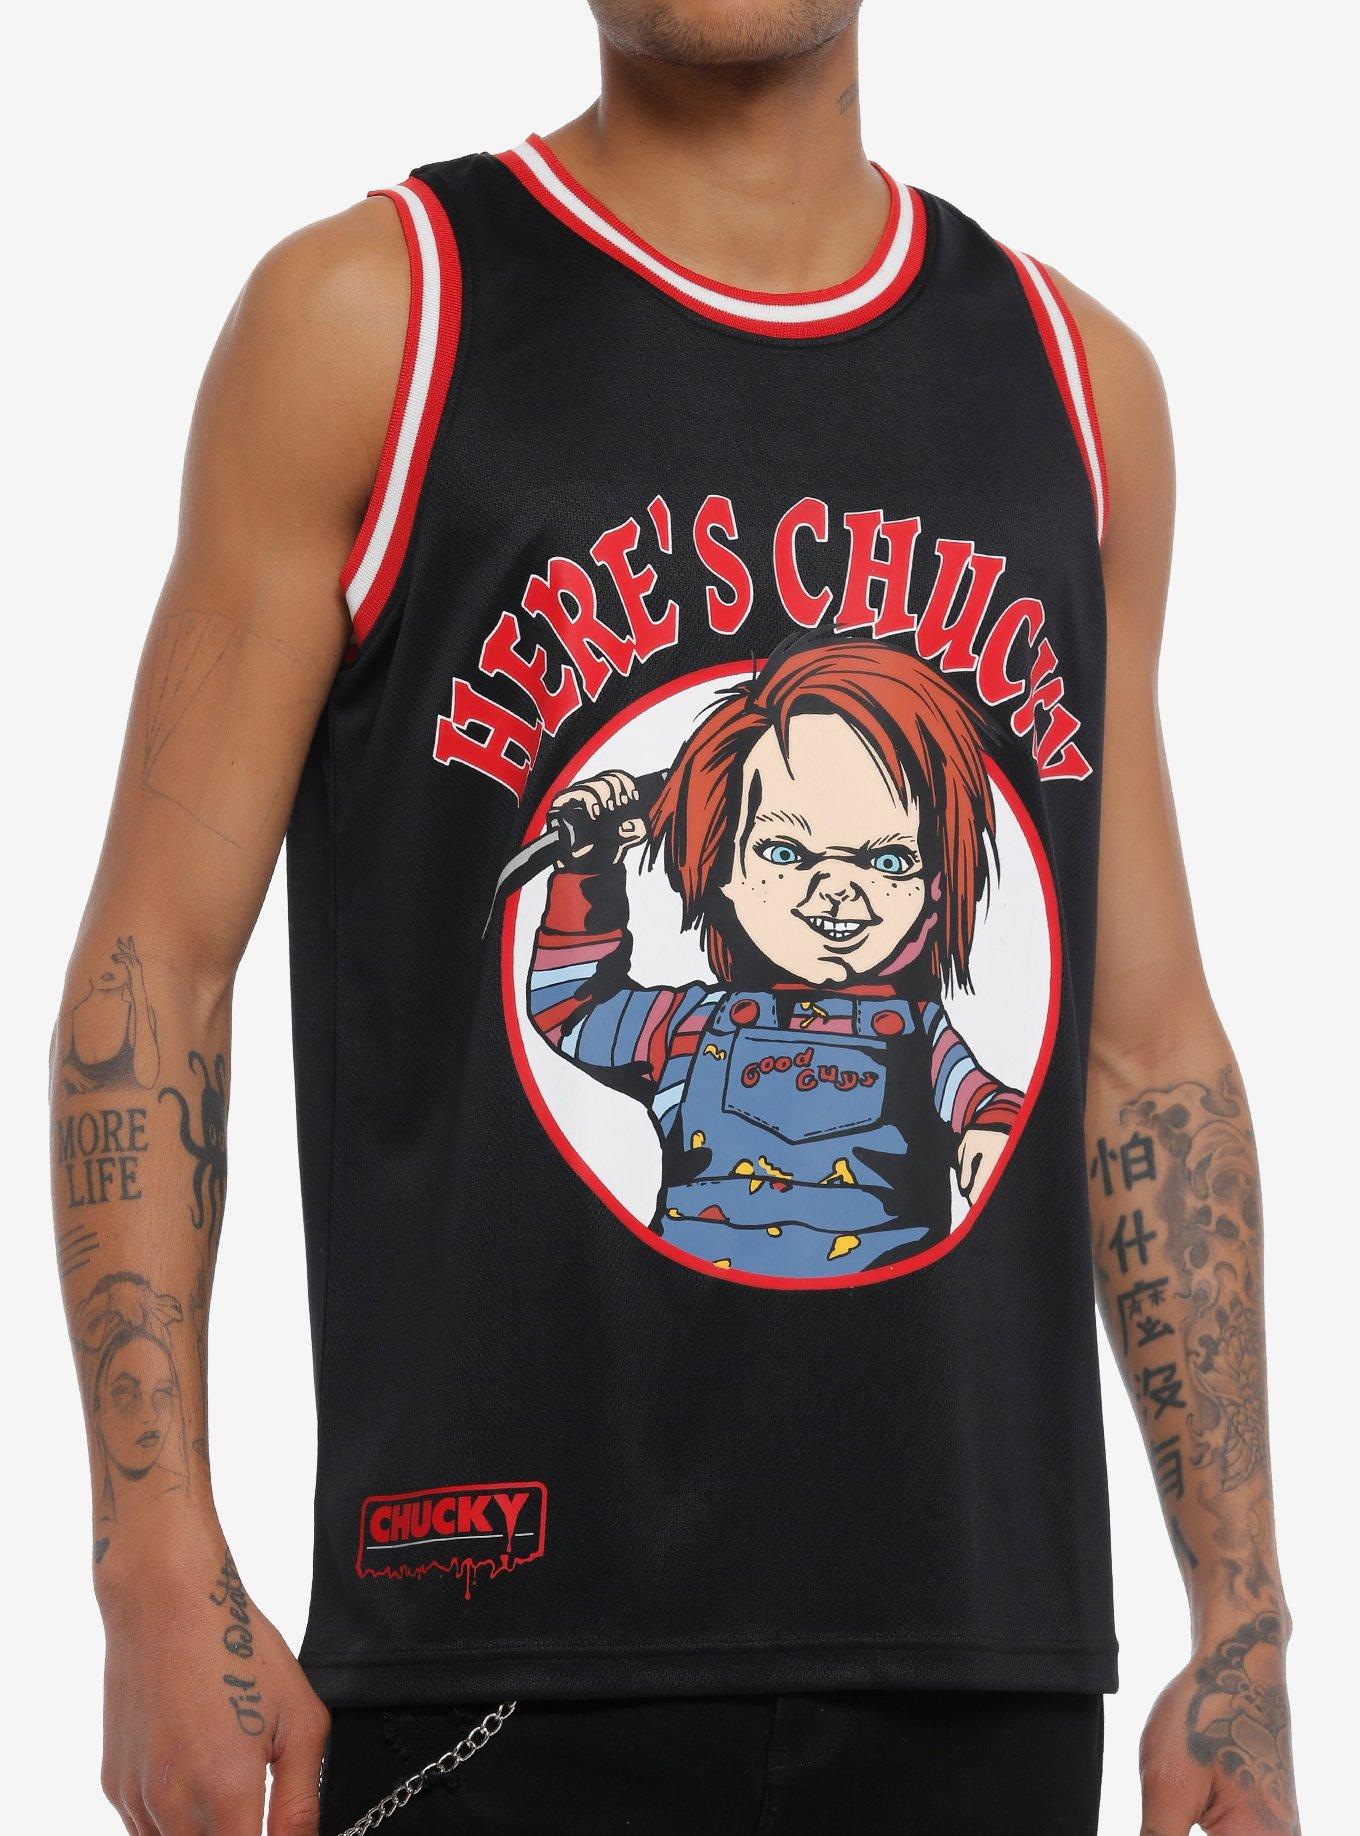 Chucky Basketball Jersey